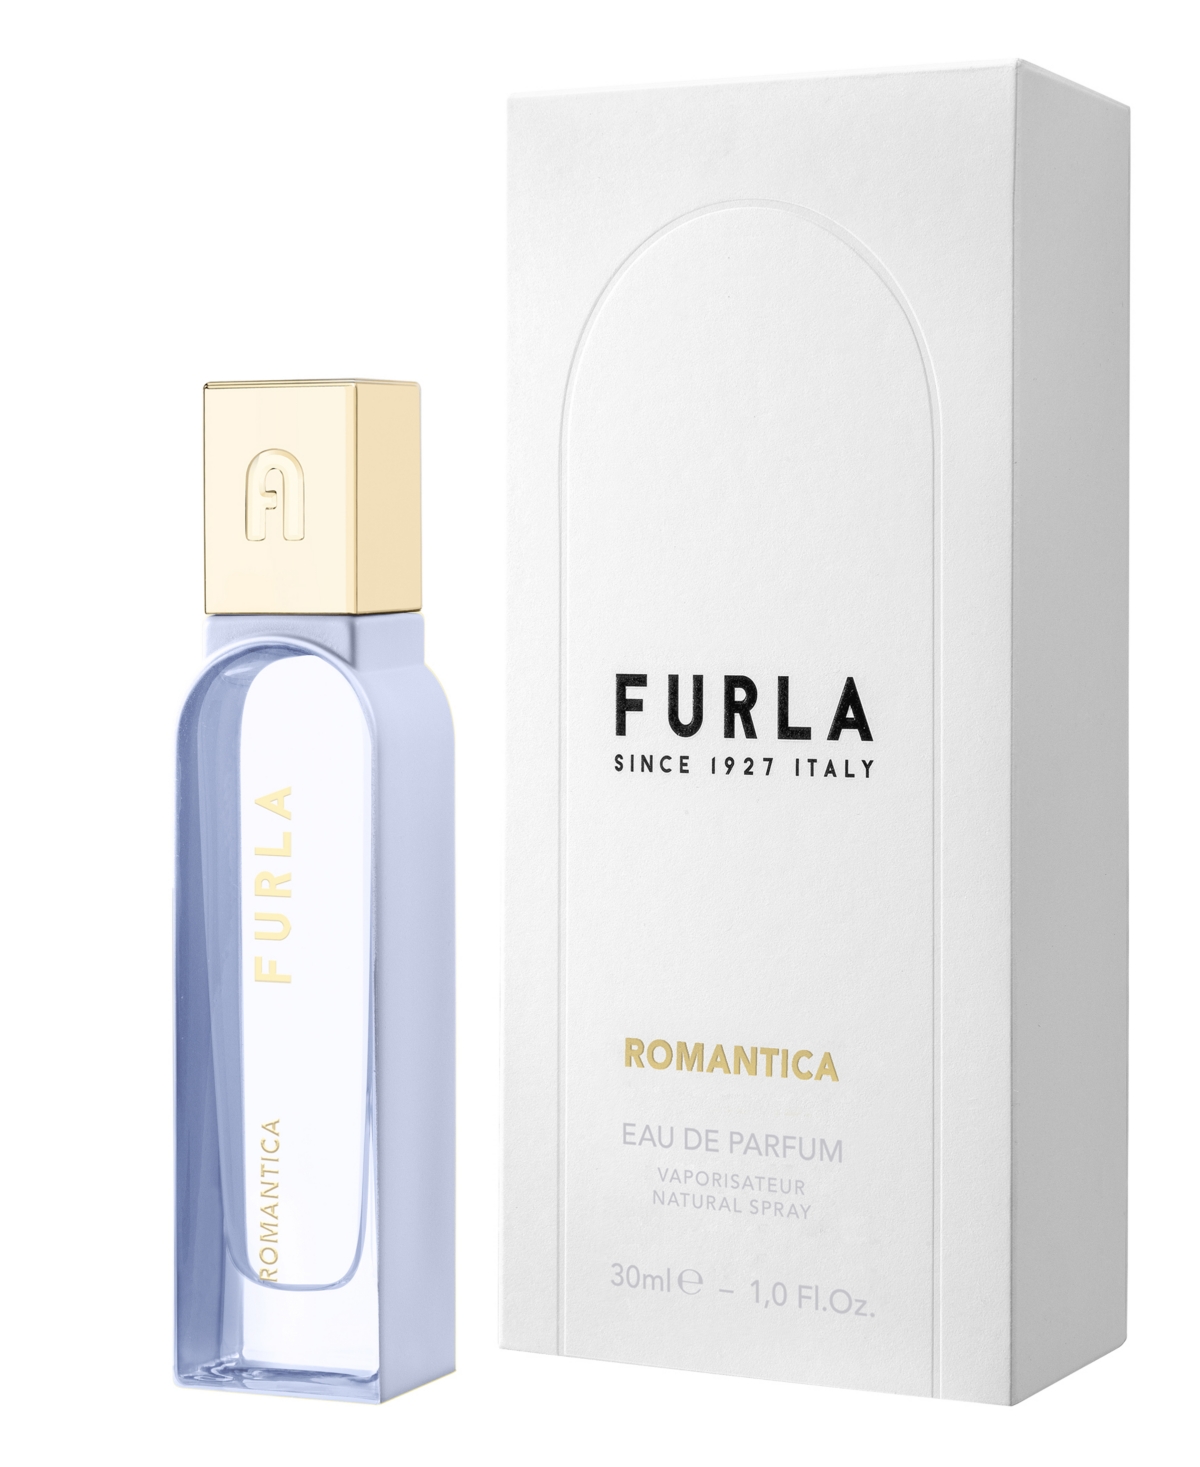 Furla Women's Romantica Eau De Parfum Spray, 1.0 Fl oz